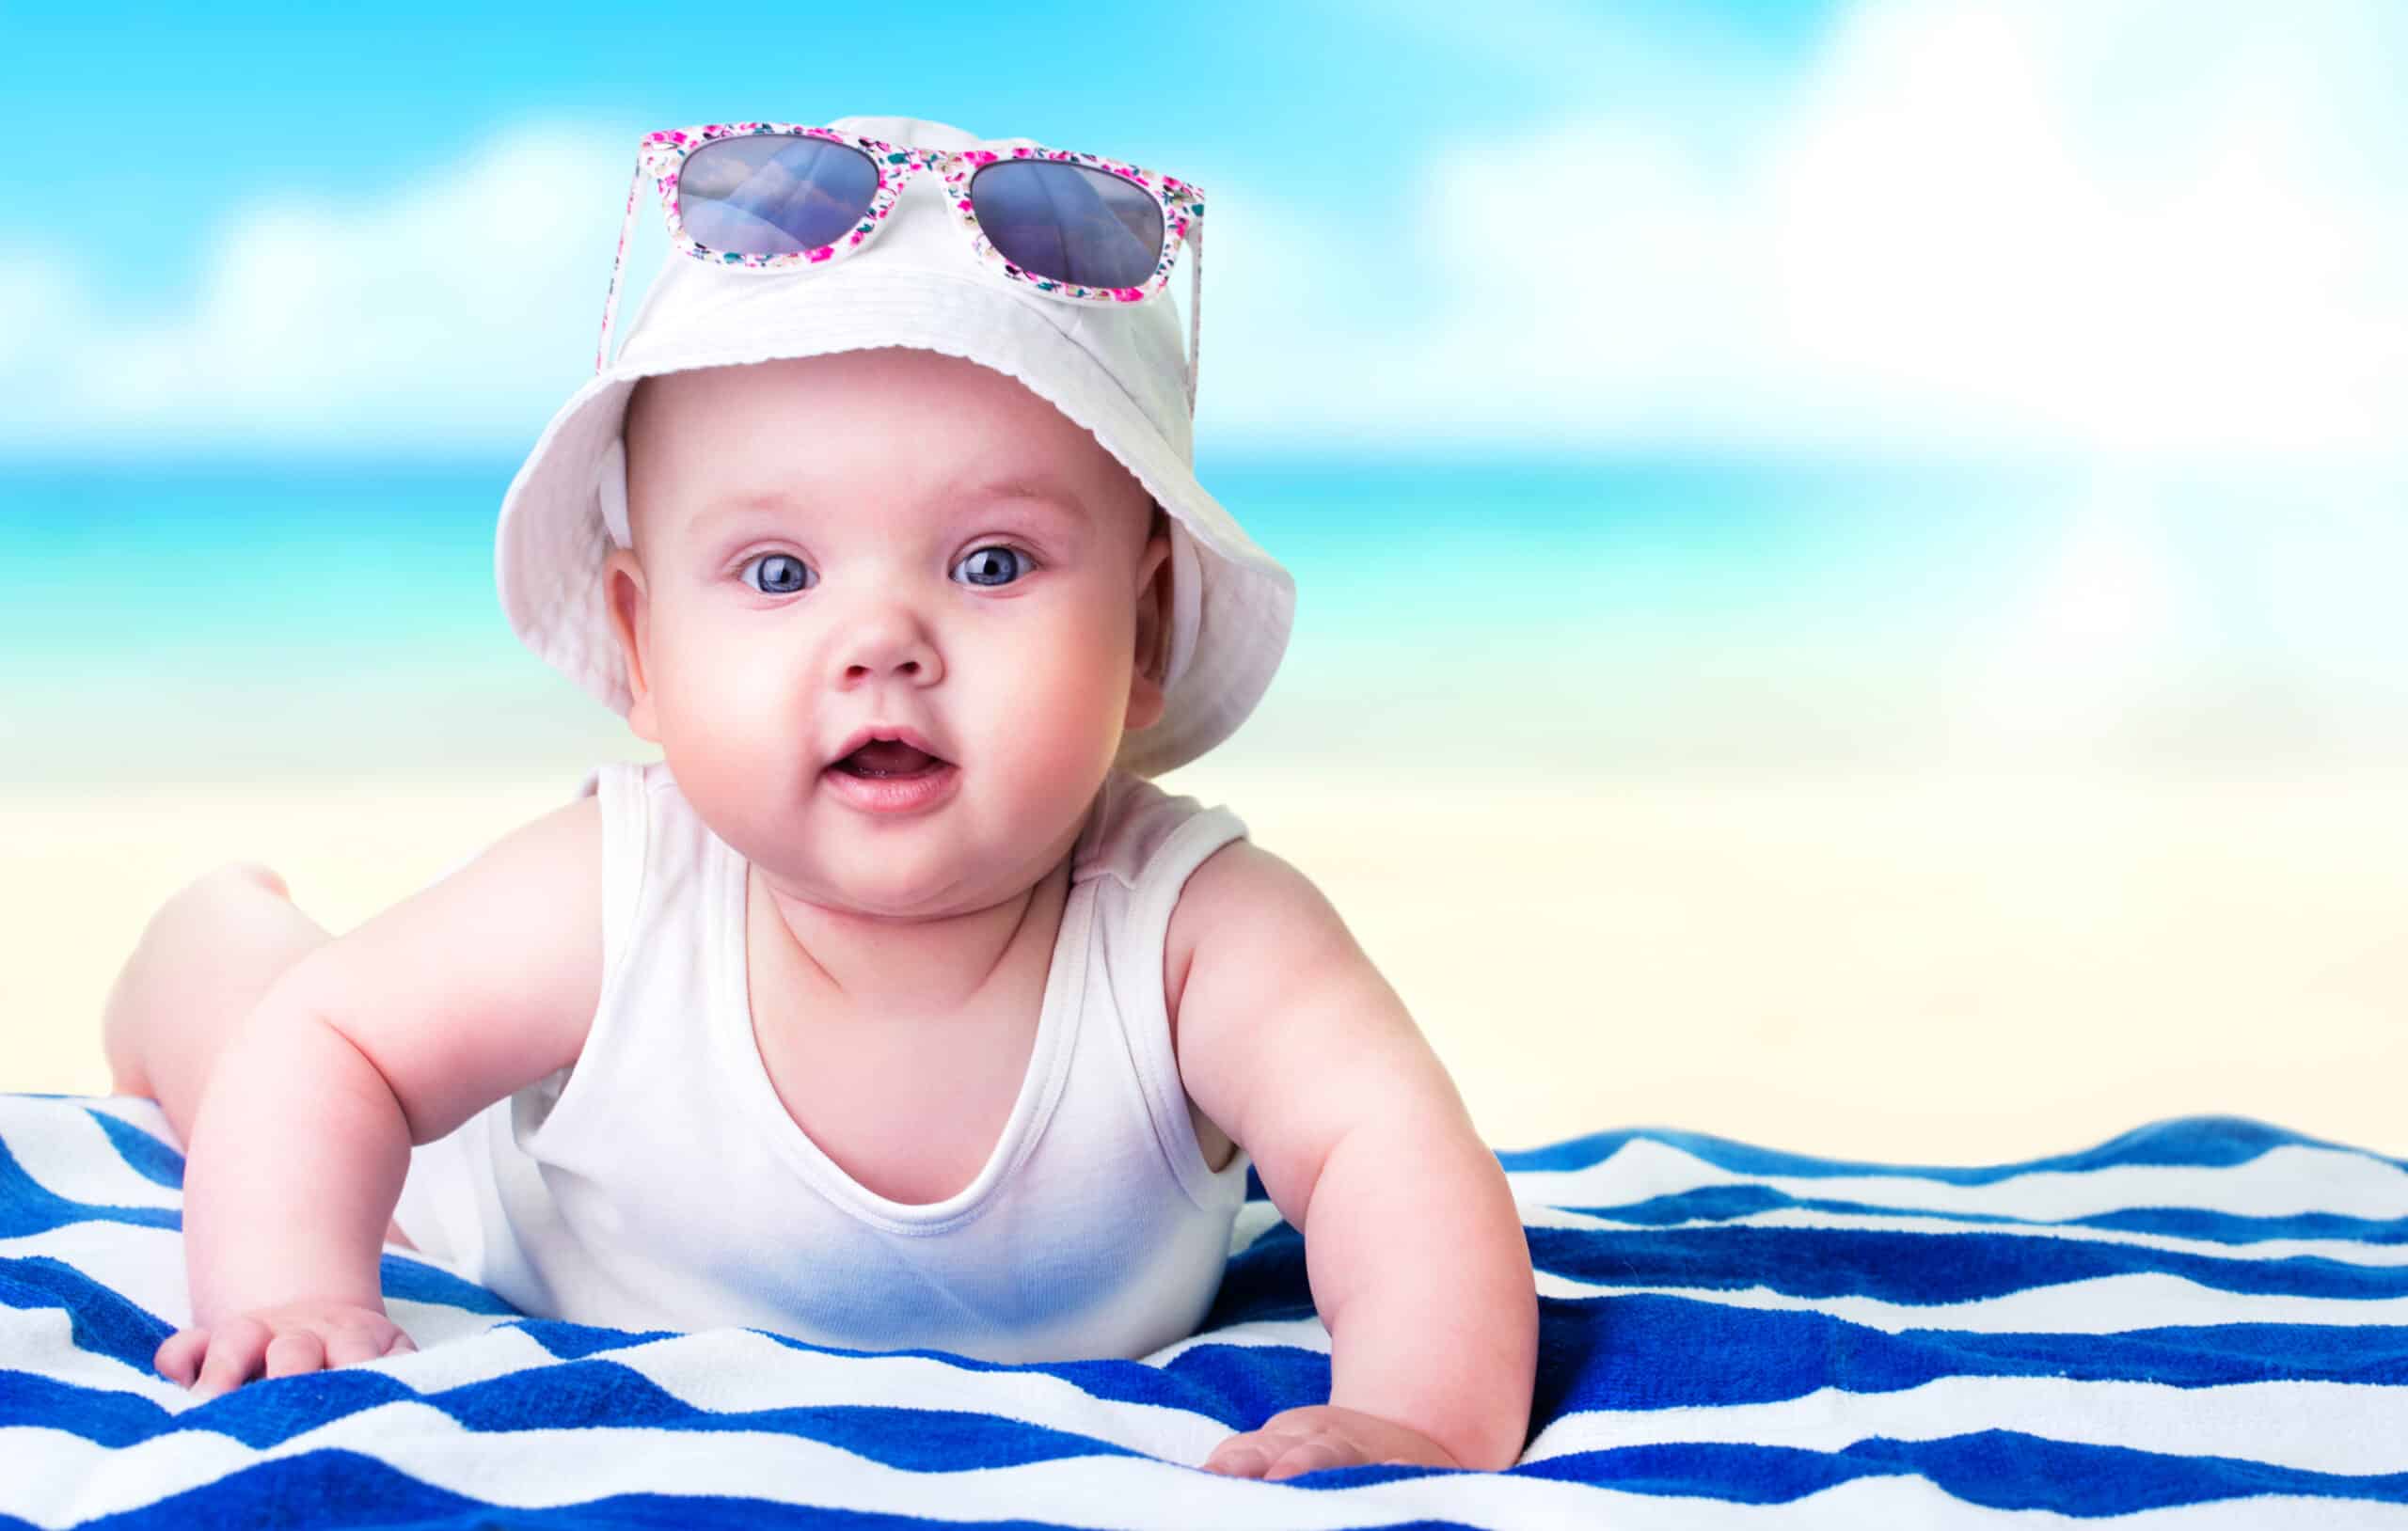 Baby girl's funny face on a beach towel ocean background. Caucasian newborn child summer resort concept.Advertisement travel banner.